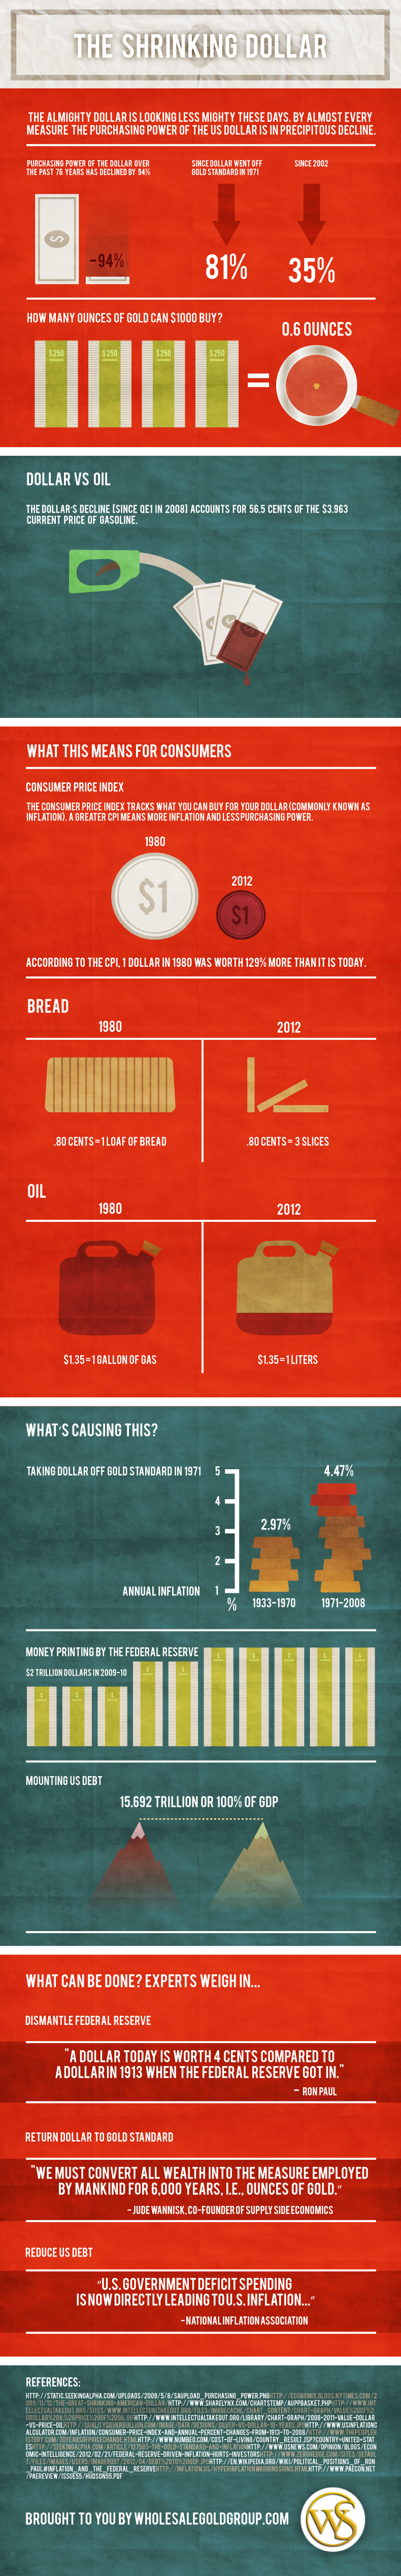 infographic-gold-inflation-dollar_september-2012